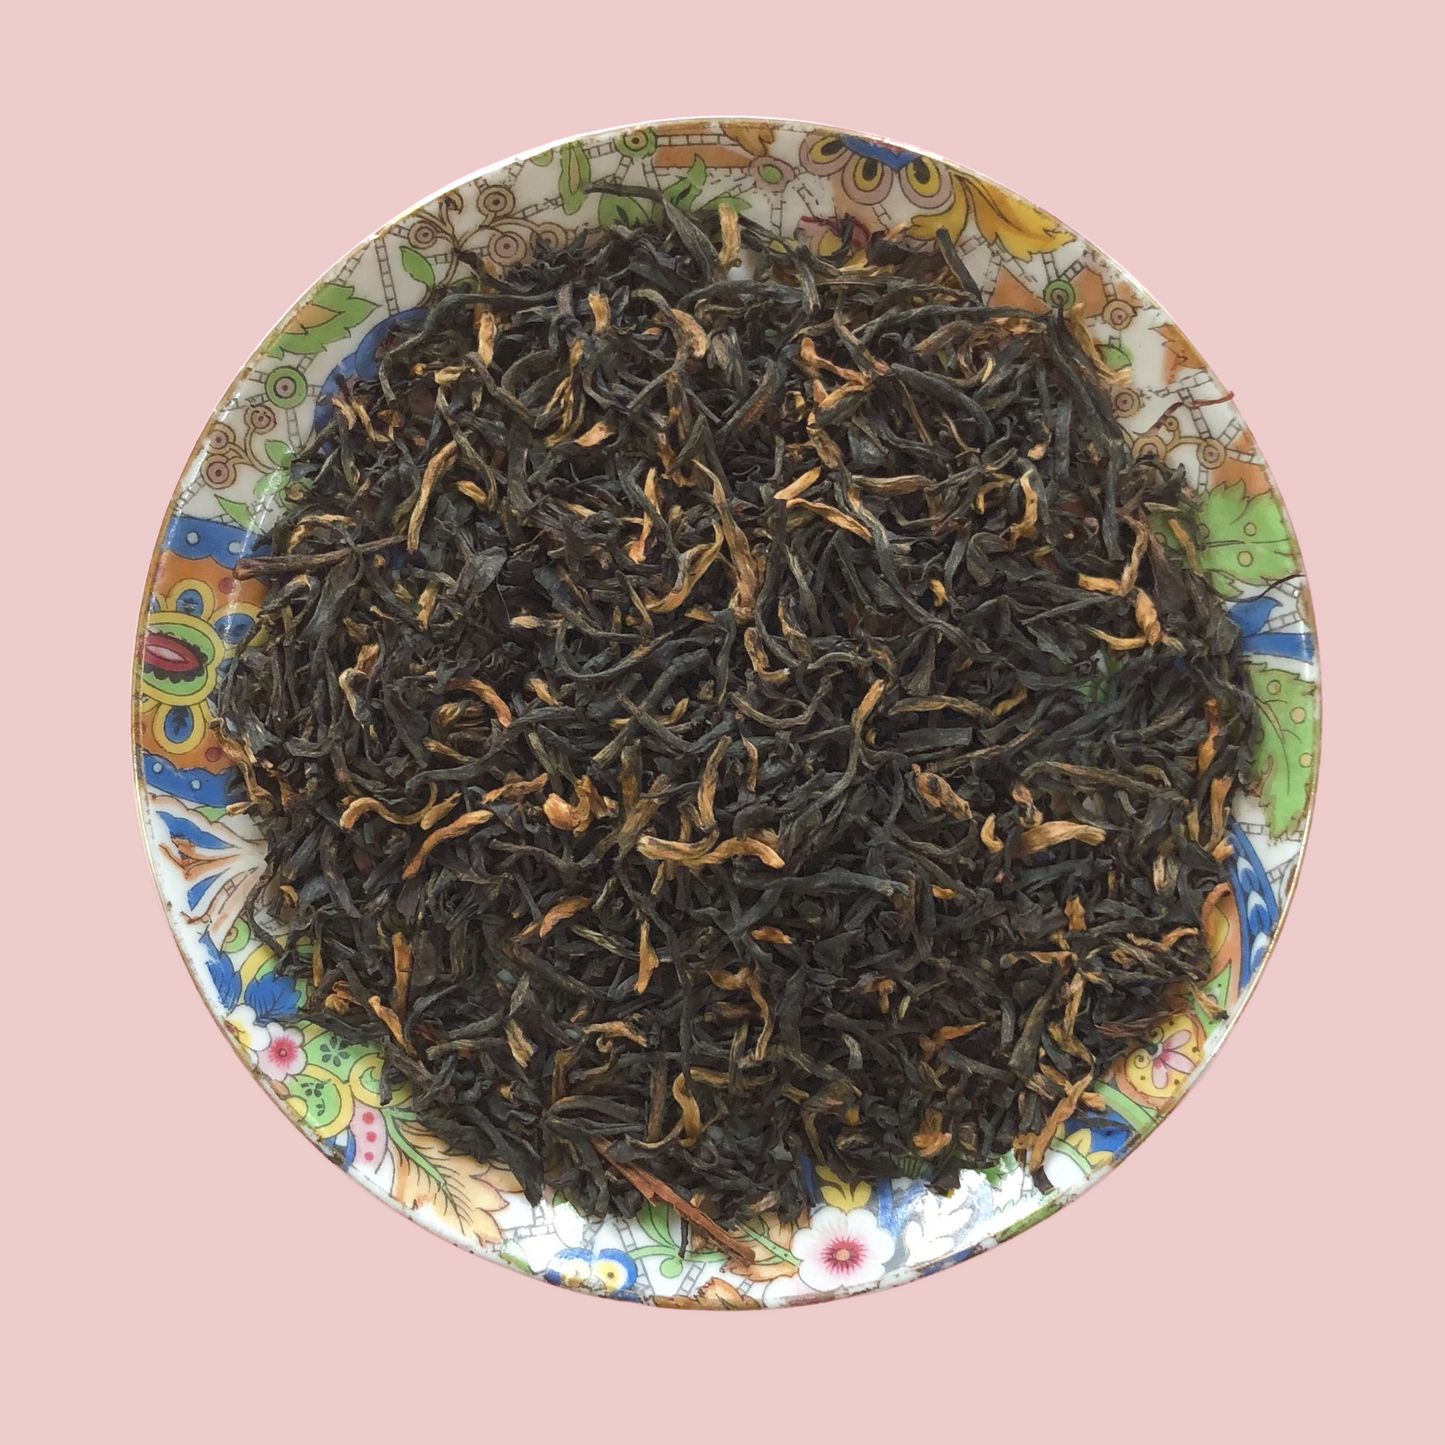 Buy Online : Second Flush Loose Leaf Tea - Buy Premium Assam Tea  - ChaiExperience